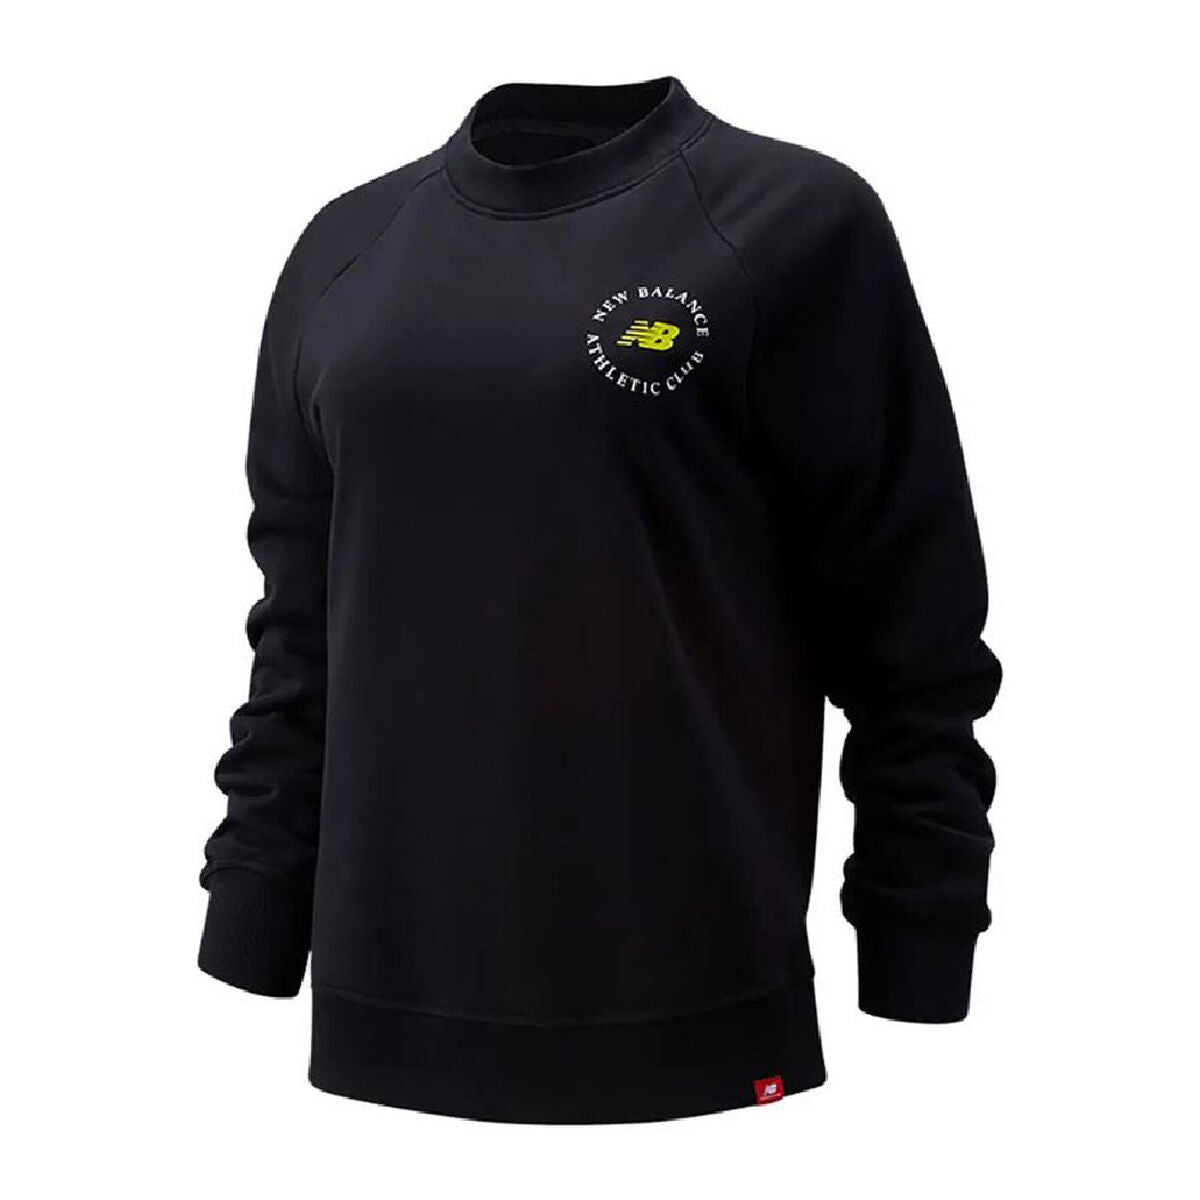 Kaufe Herren Sweater ohne Kapuze New Balance Essentials Athletic Club bei AWK Flagship um € 65.00